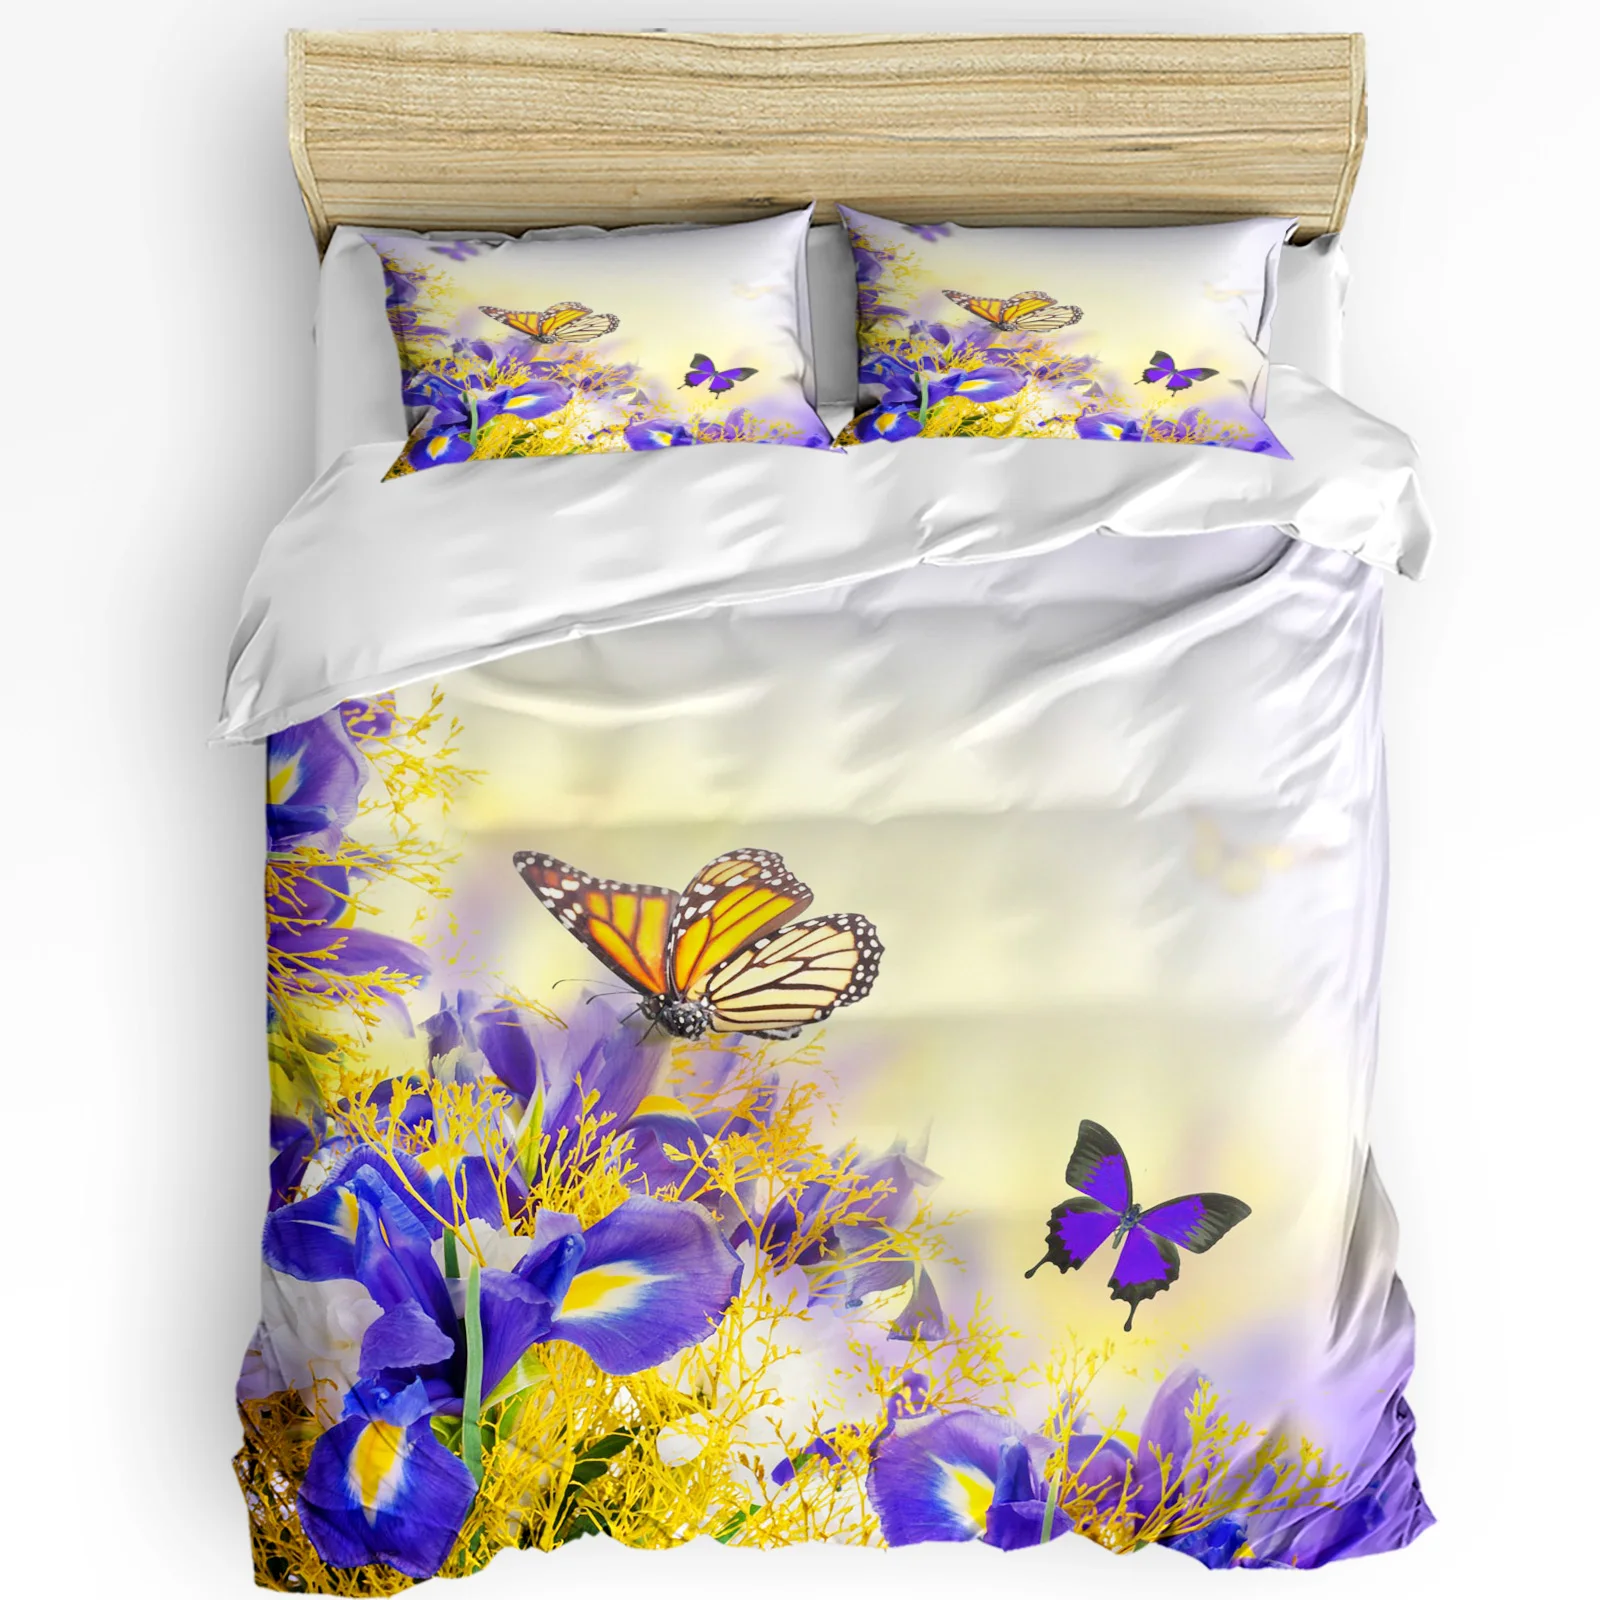 

Iris Flower Butterfly Printed Comfort Duvet Cover Pillow Case Home Textile Quilt Cover Boy Kid Teen Girl Luxury 3pcs Bedding Set